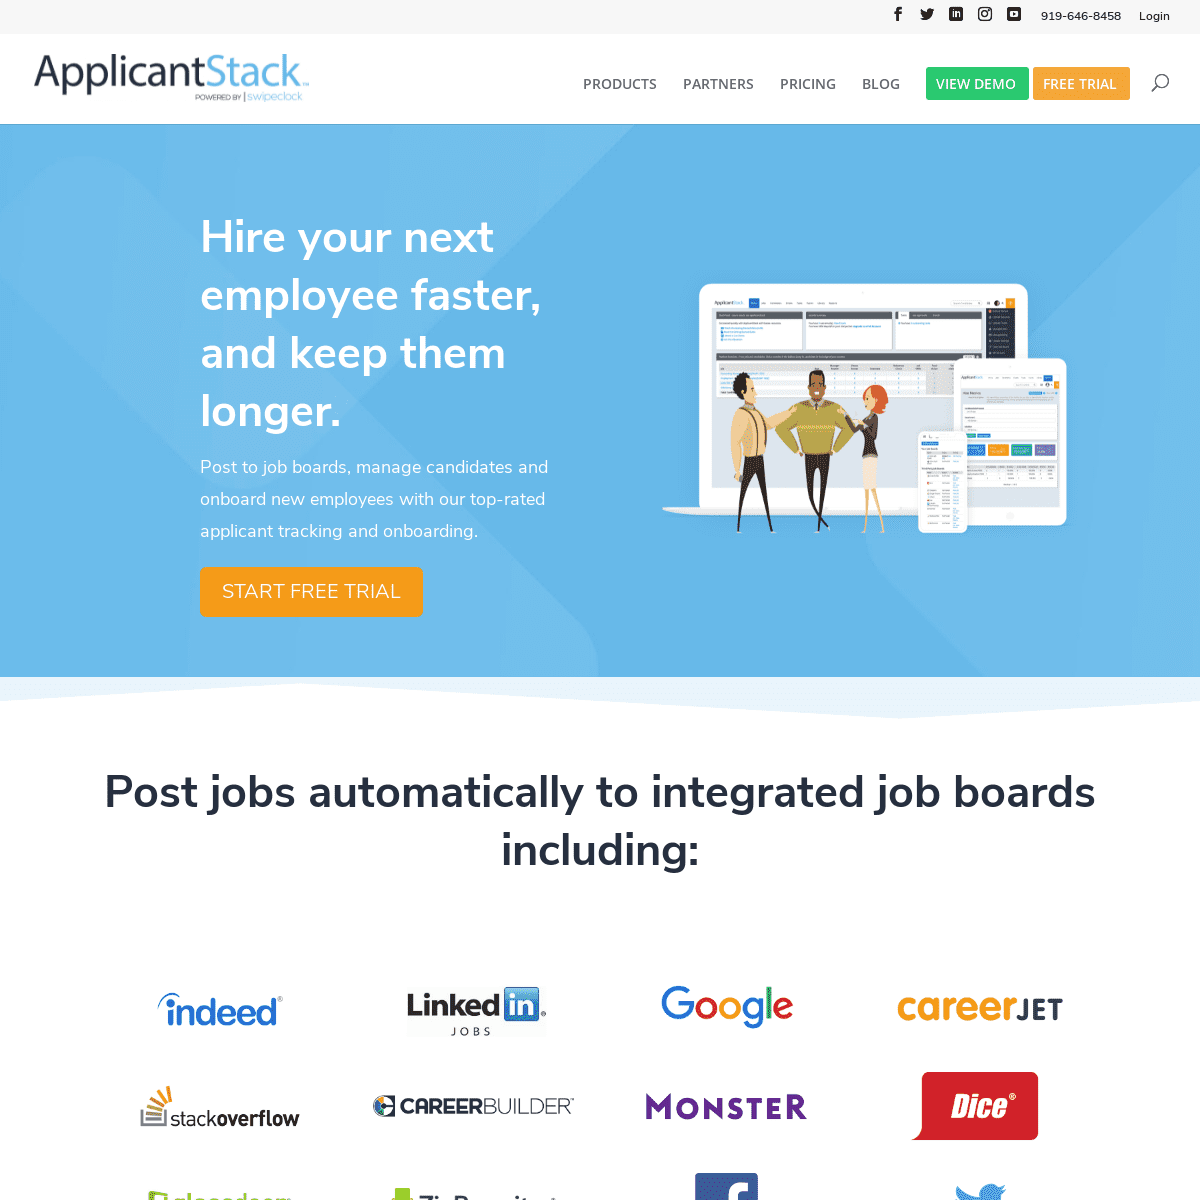 A complete backup of https://applicantstack.com